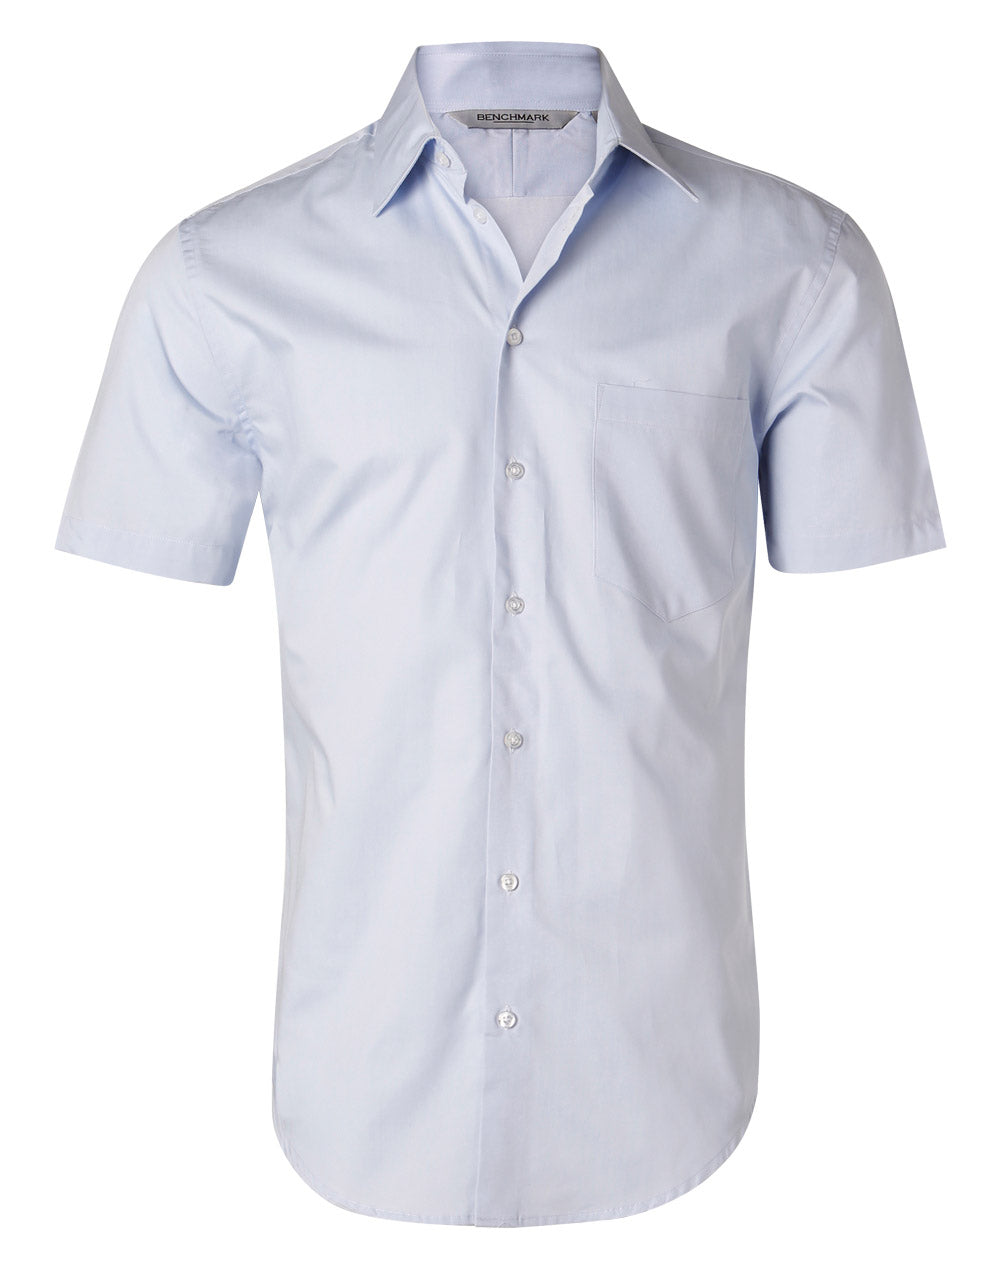 Winning Spirit-Men's Fine Twill Short Sleeve Shirt-M7030S